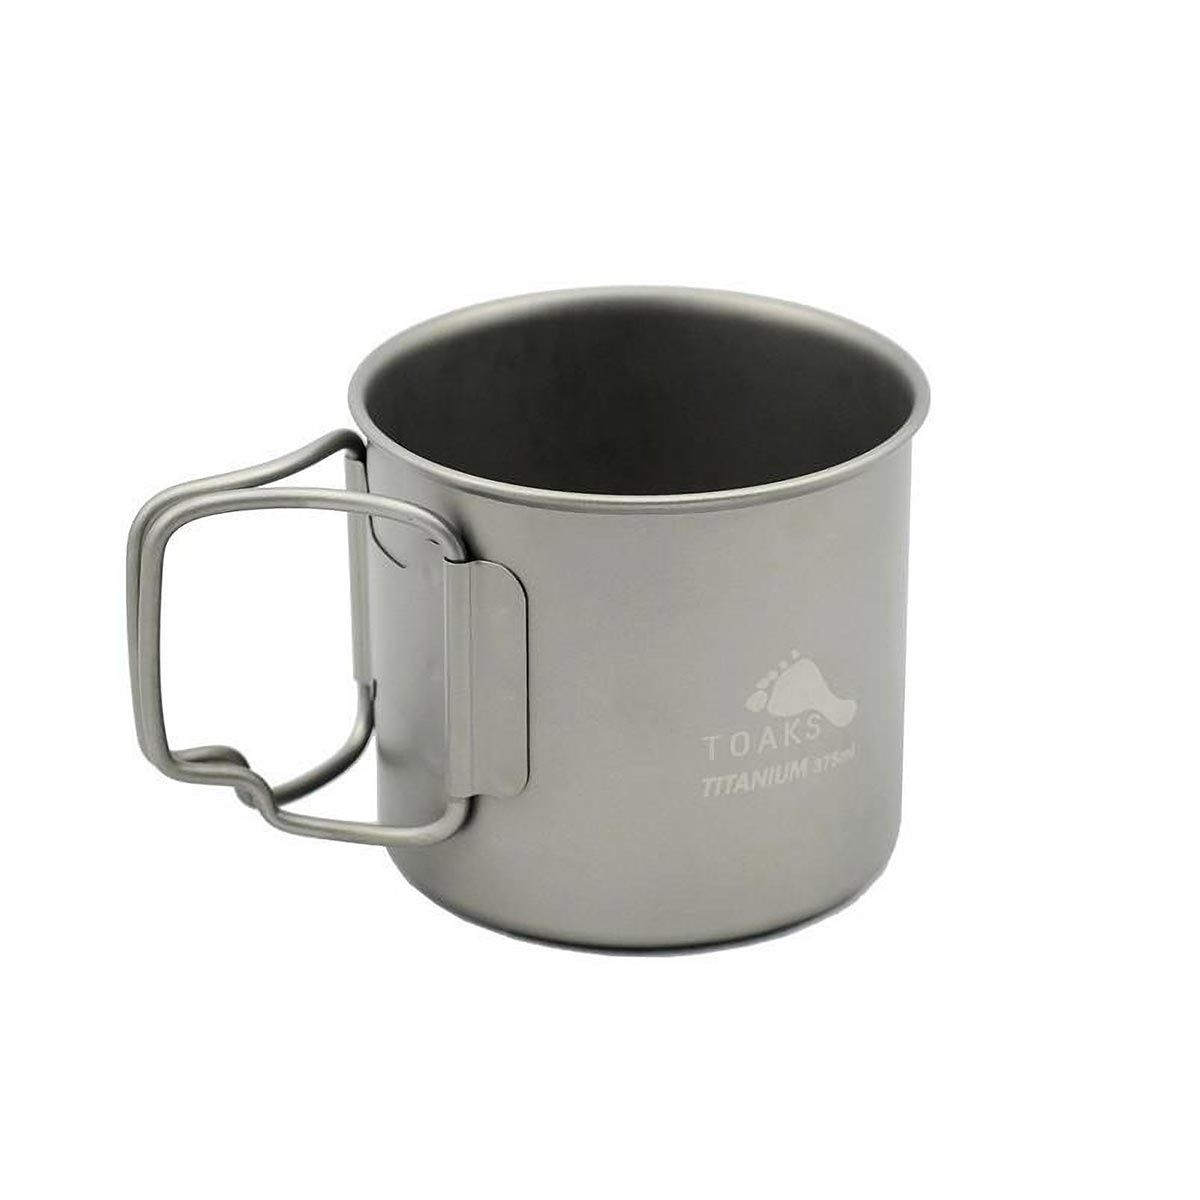 Toaks titanium mug - 0.38L